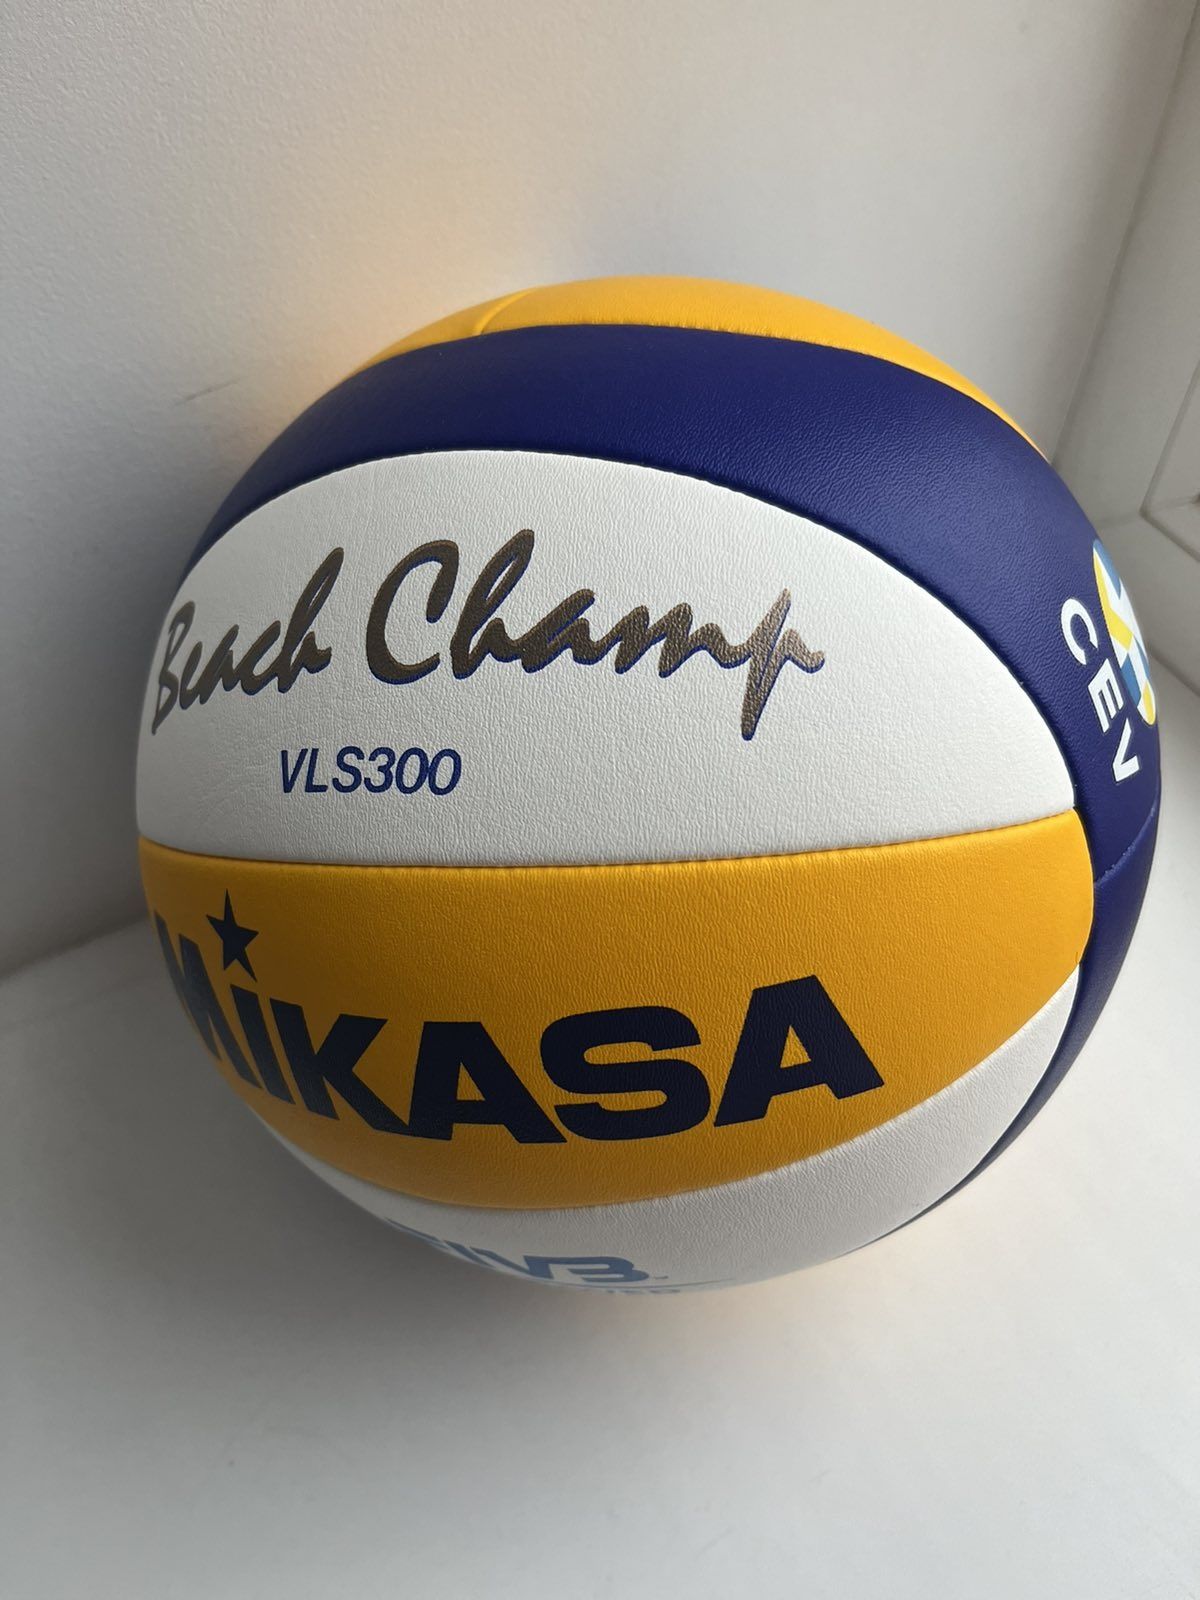 Новий оригінальний пляжний волейбольный мяч Mikasa vls300